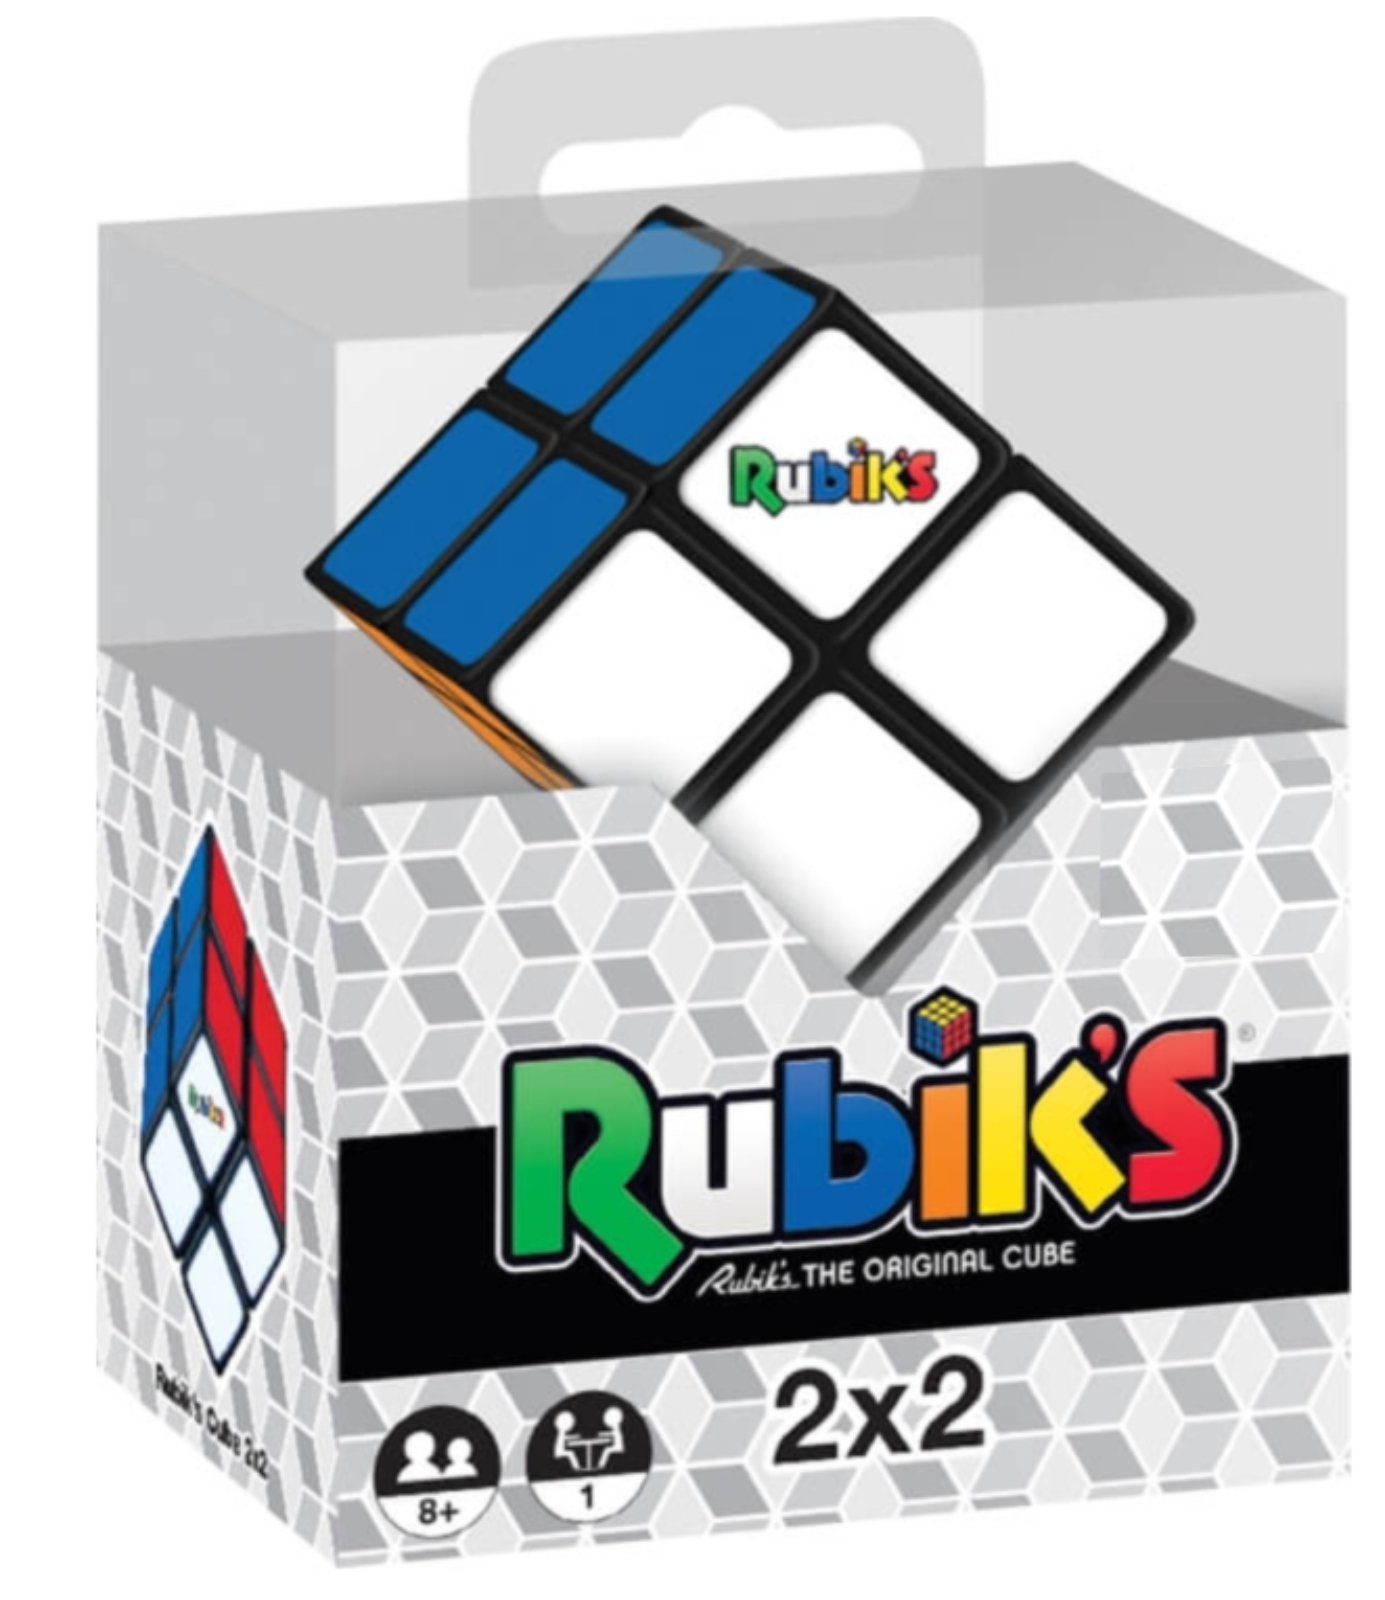 Zauberwürfel 2 3D-Puzzle x 1 Rubik´s Beginner Puzzleteile Rubiks Cube ORIGINAL, 2